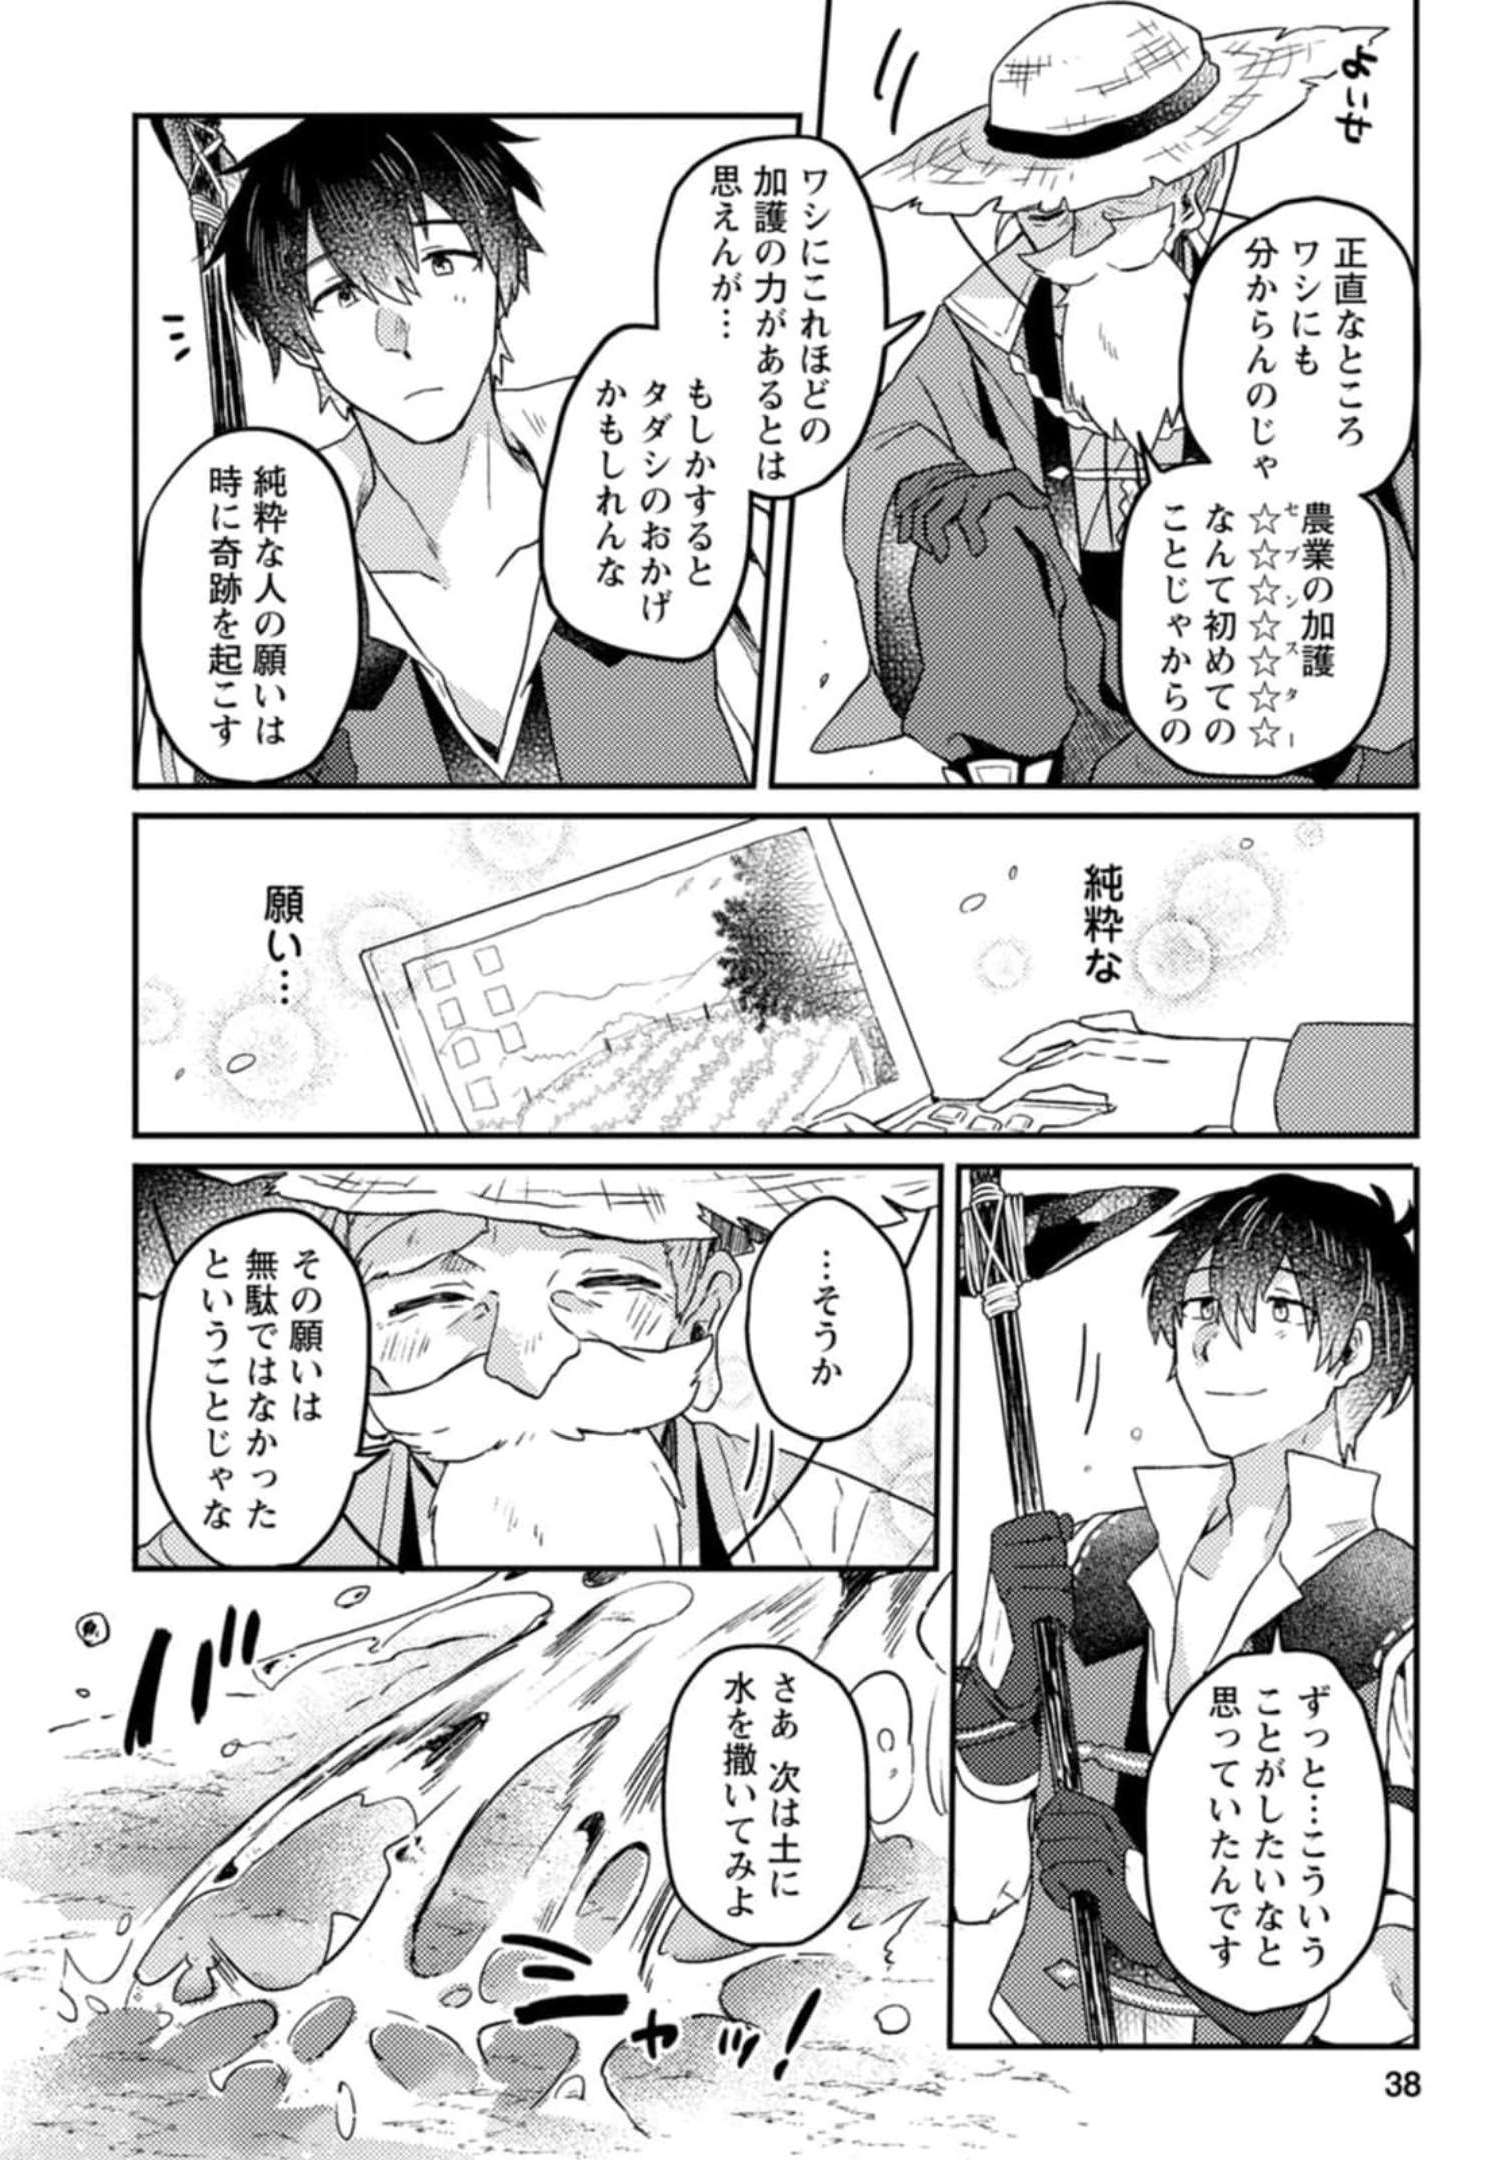 Kamigami no Kago de Seisan Kakumei - Chapter 2 - Page 2